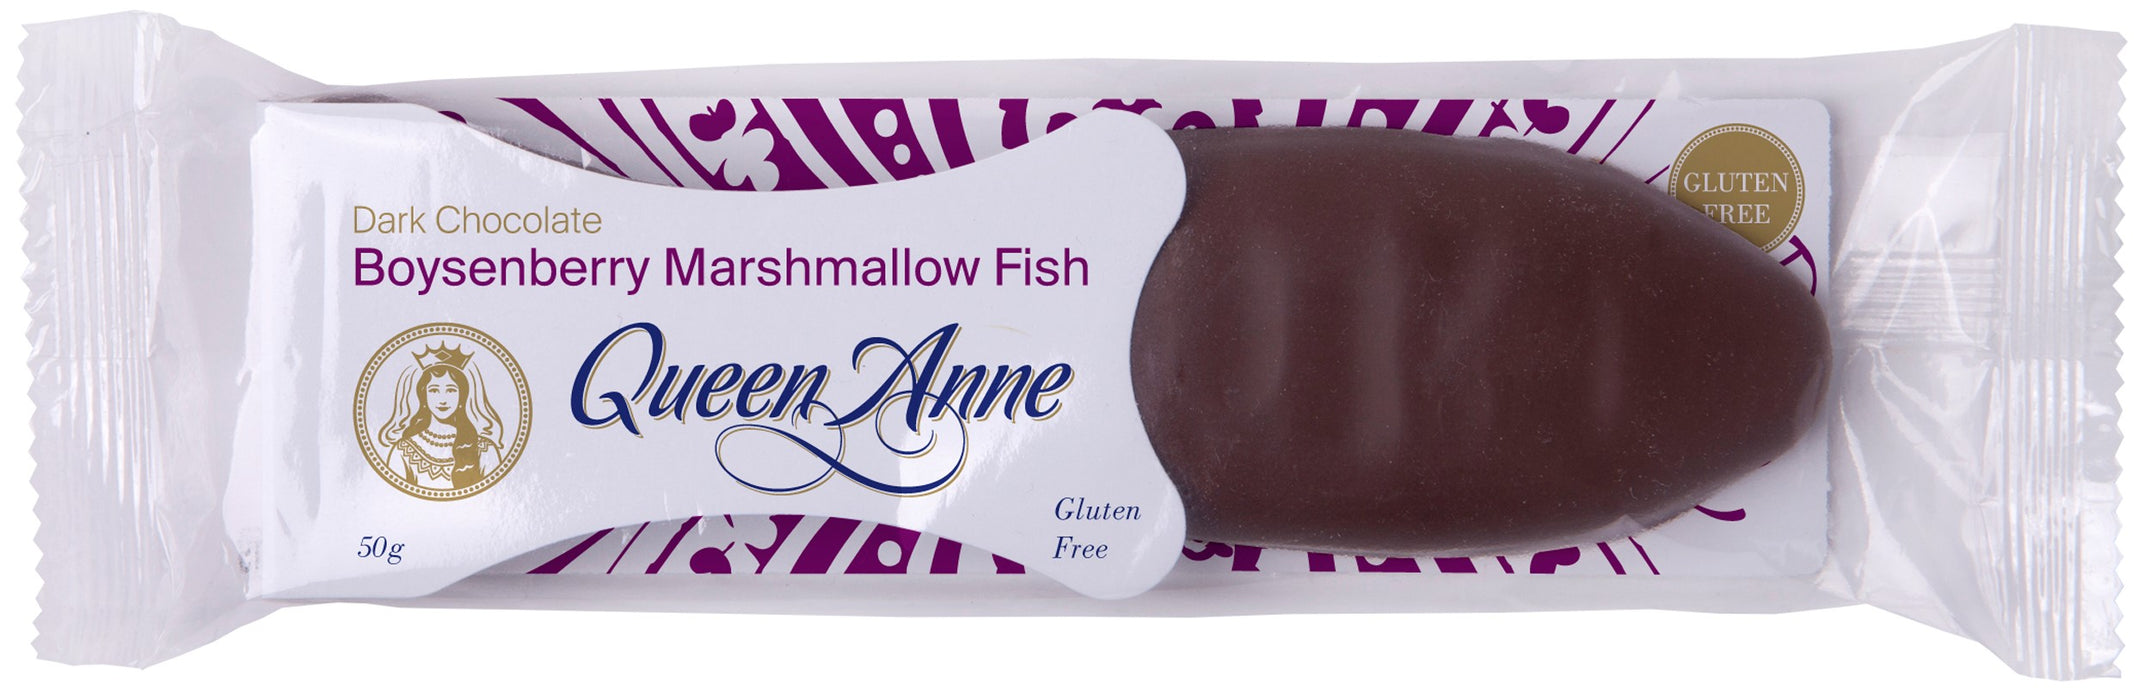 Dark Chocolate Boysenberry Marshmallow Fish 50g